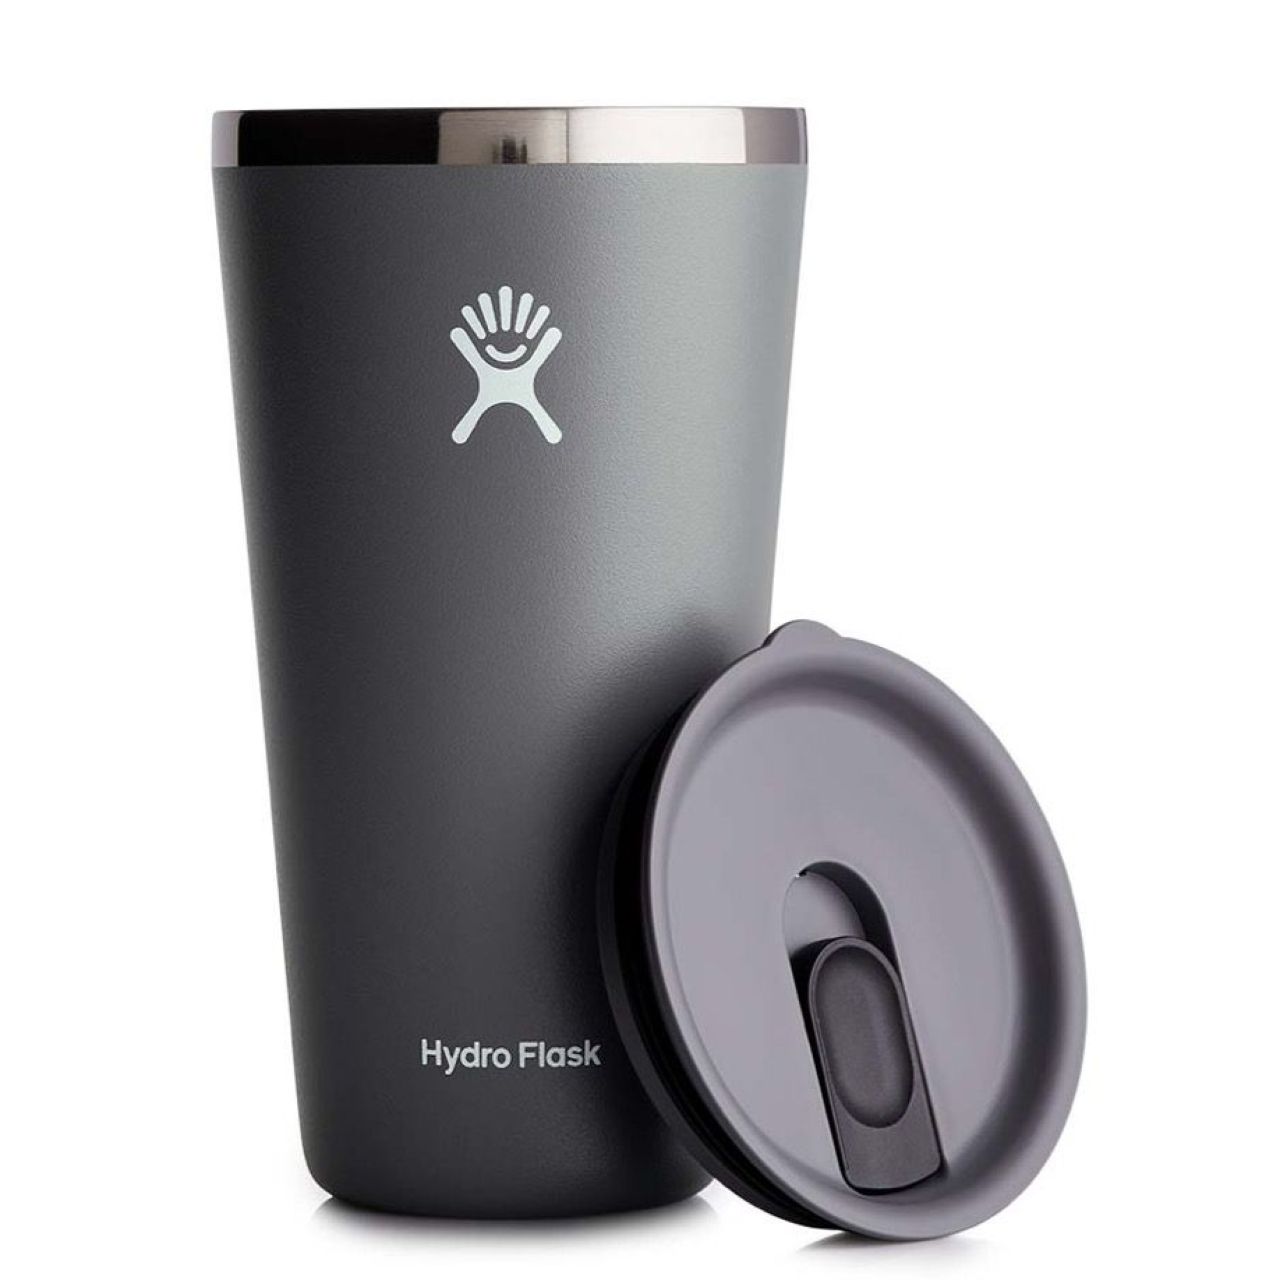 Hydro Flask Mug - Stainless Steel Reusable Tea Coffee Travel 12 oz, Cobalt